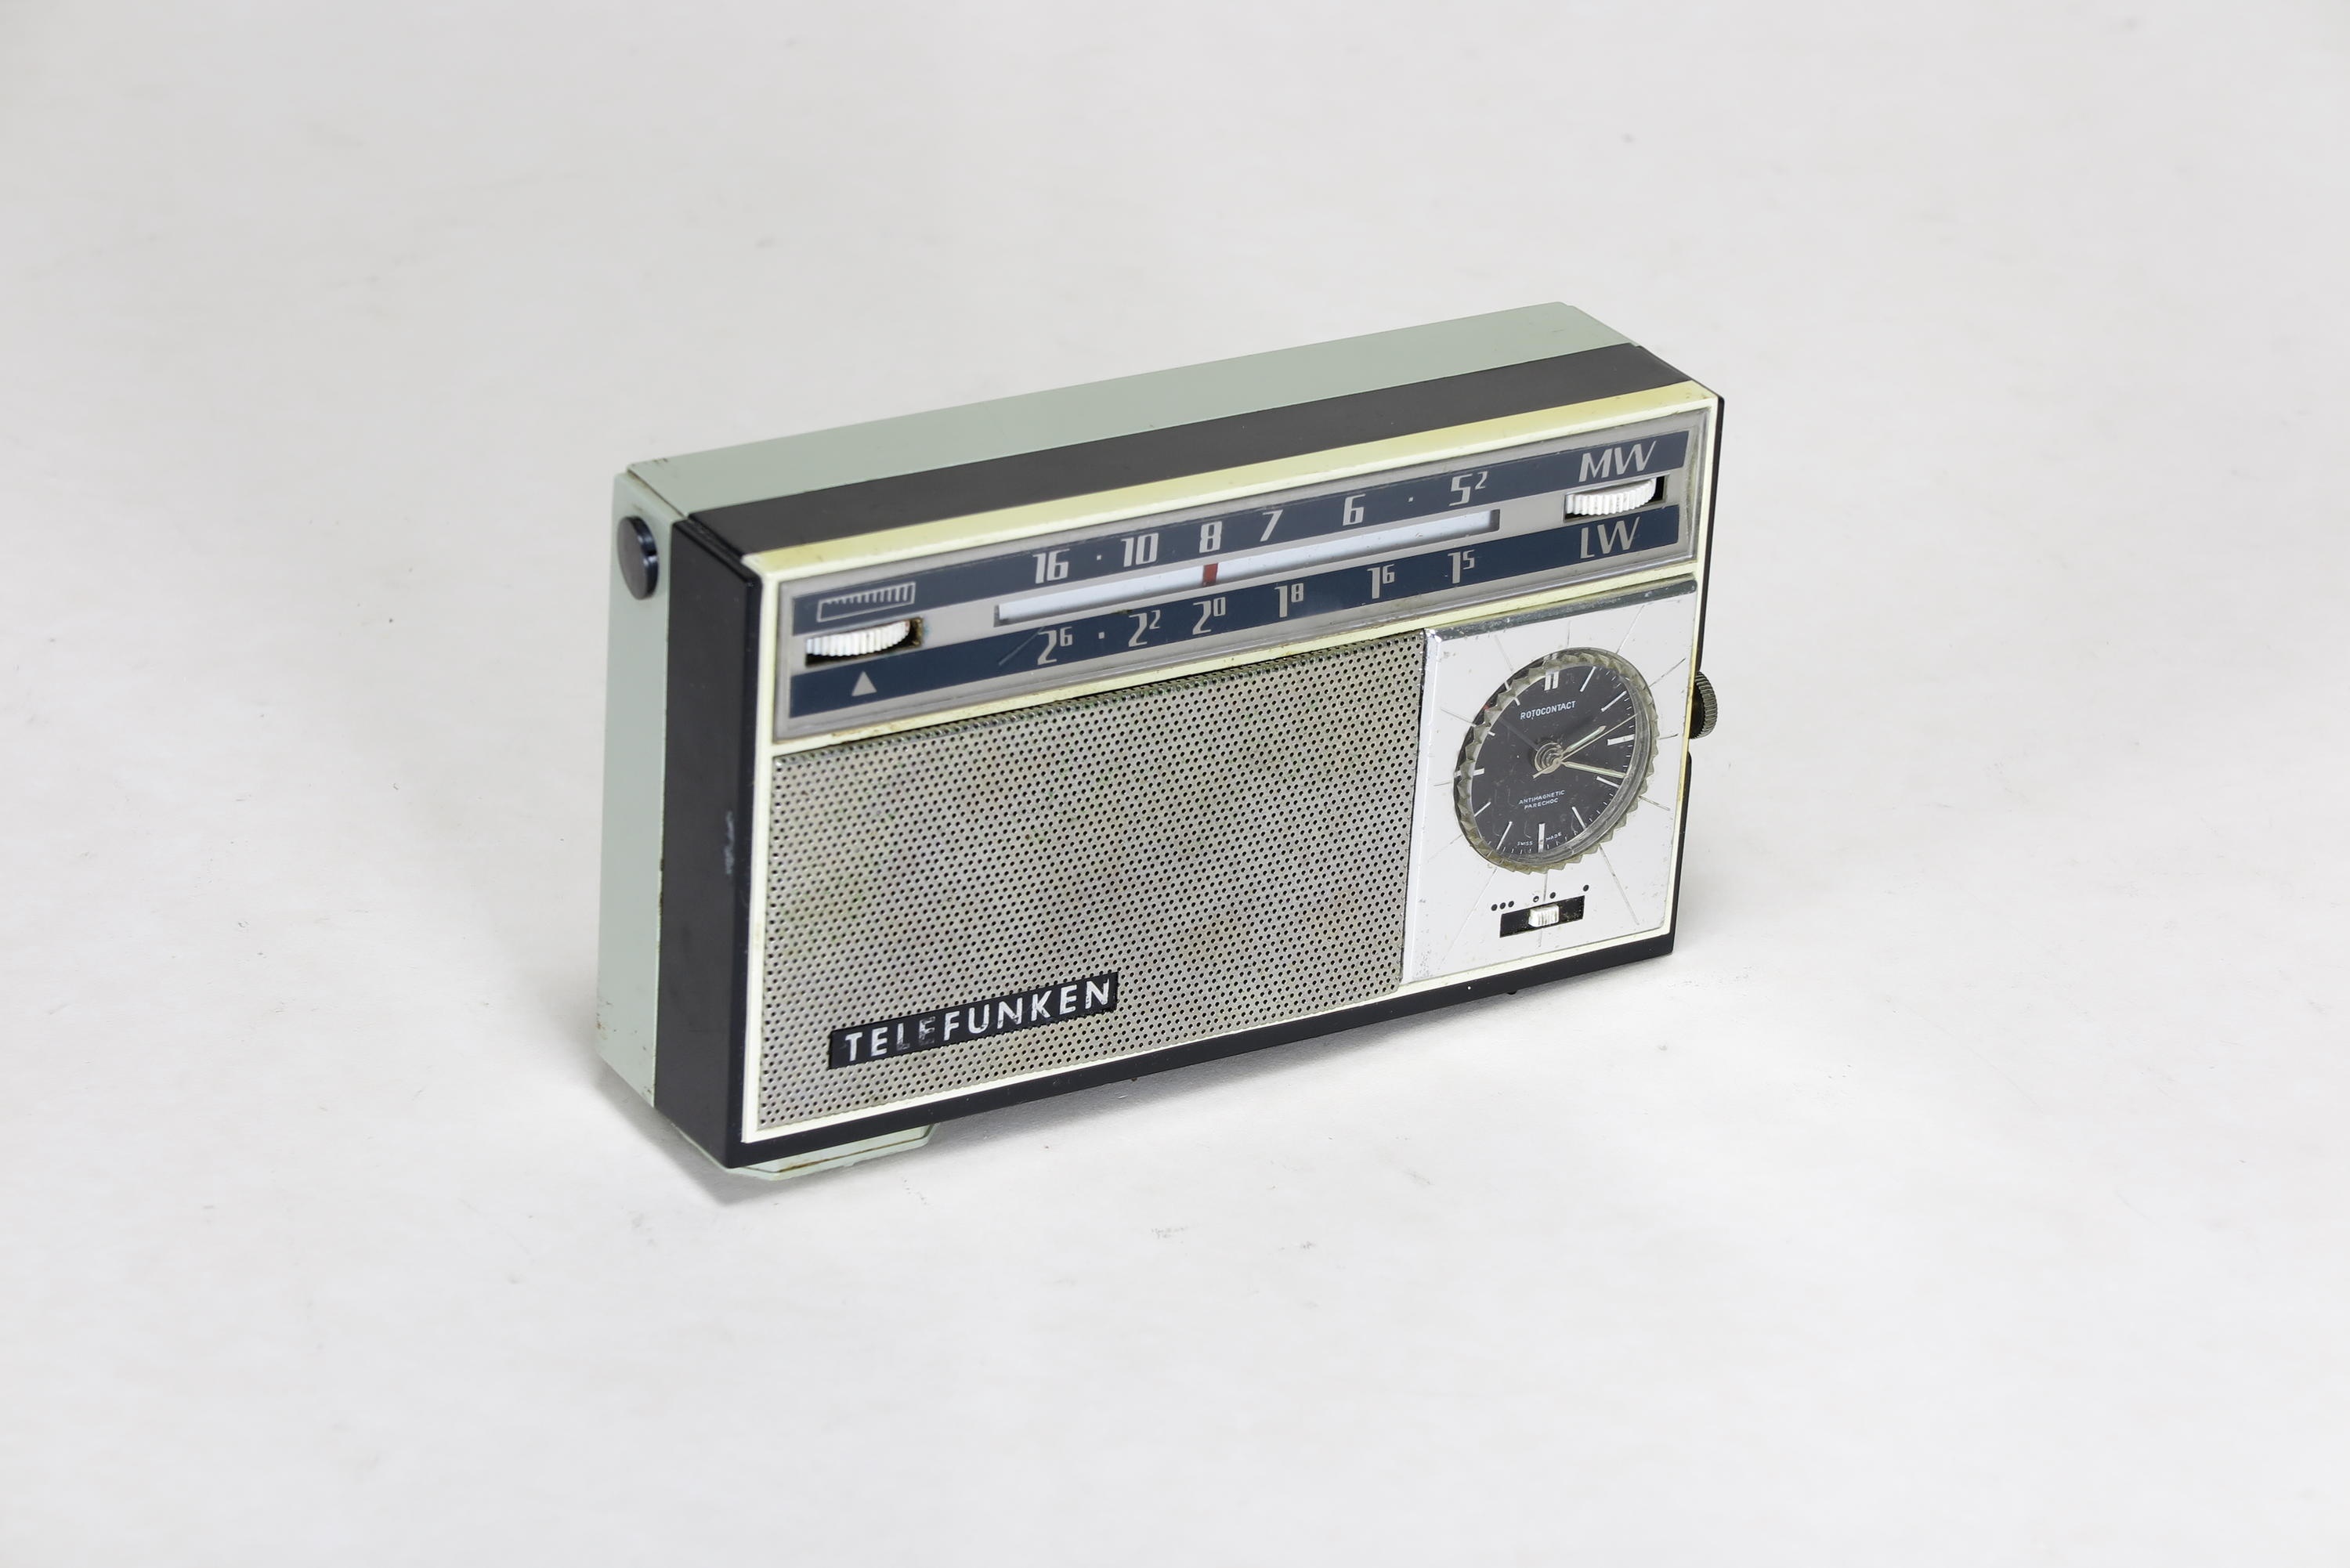 Radio Telefunken Ticcolo 3461 (Deutsches Technikmuseum CC BY)